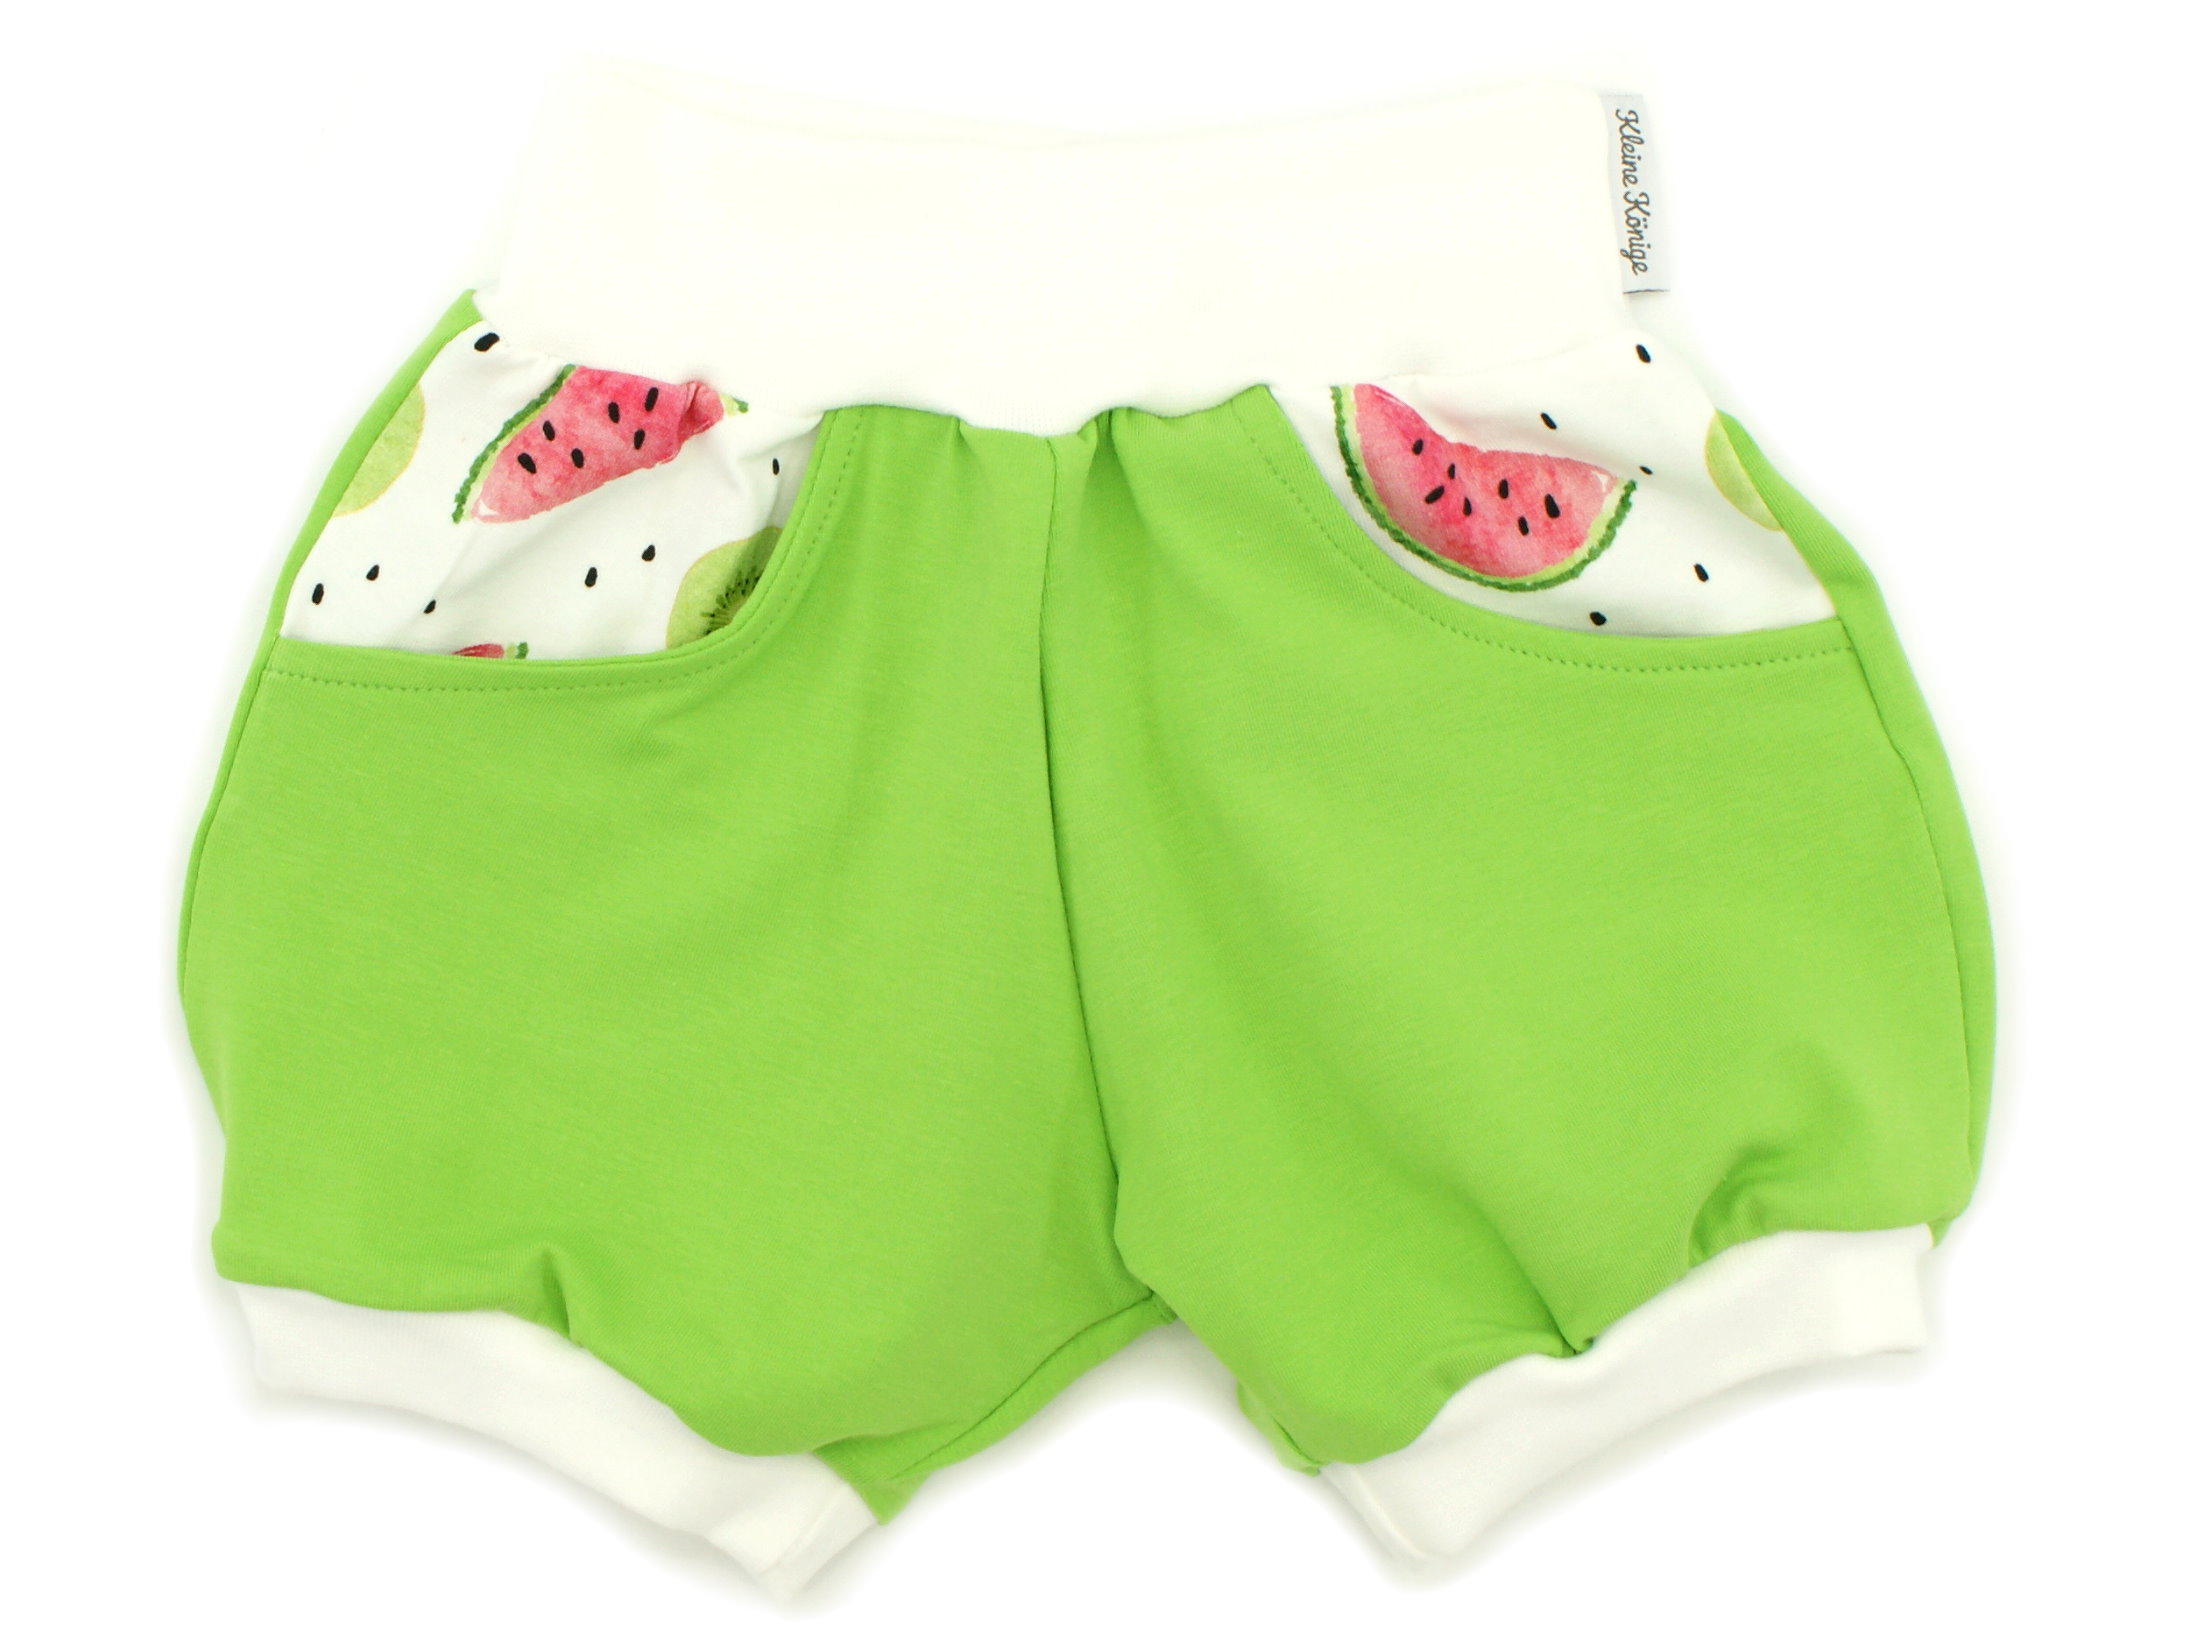 Kinder Sommer Shorts mit Taschen Melone Kiwi "Fruity" lemon